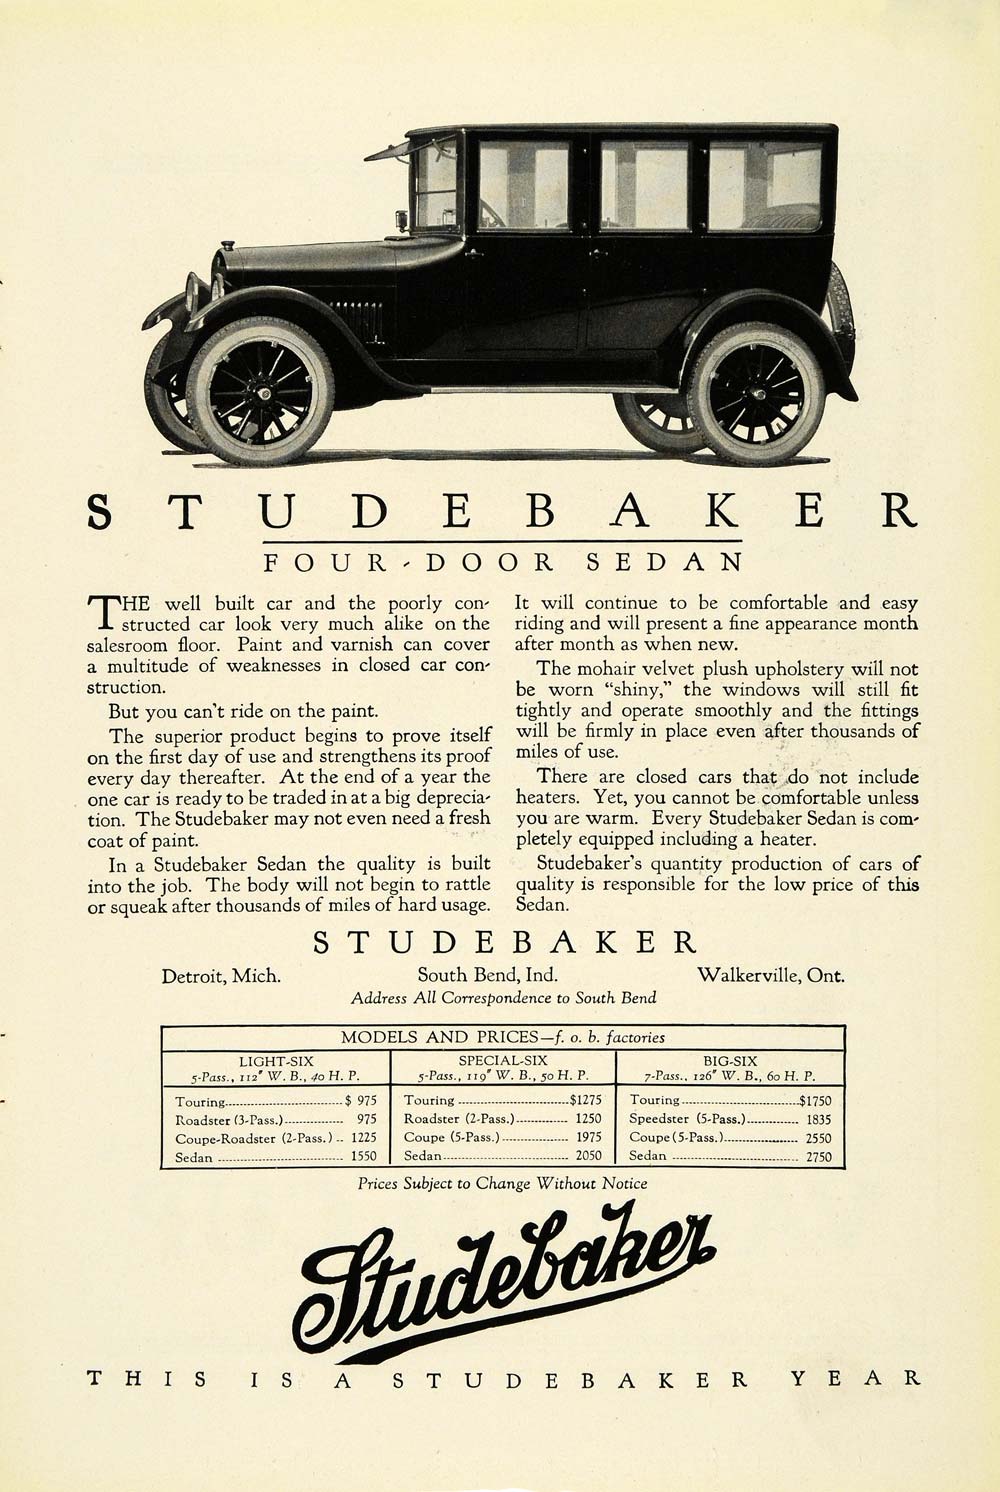 1923 Ad Antique Enclosed Studebaker Sedan Automobile Cars Models Pricing NGM1